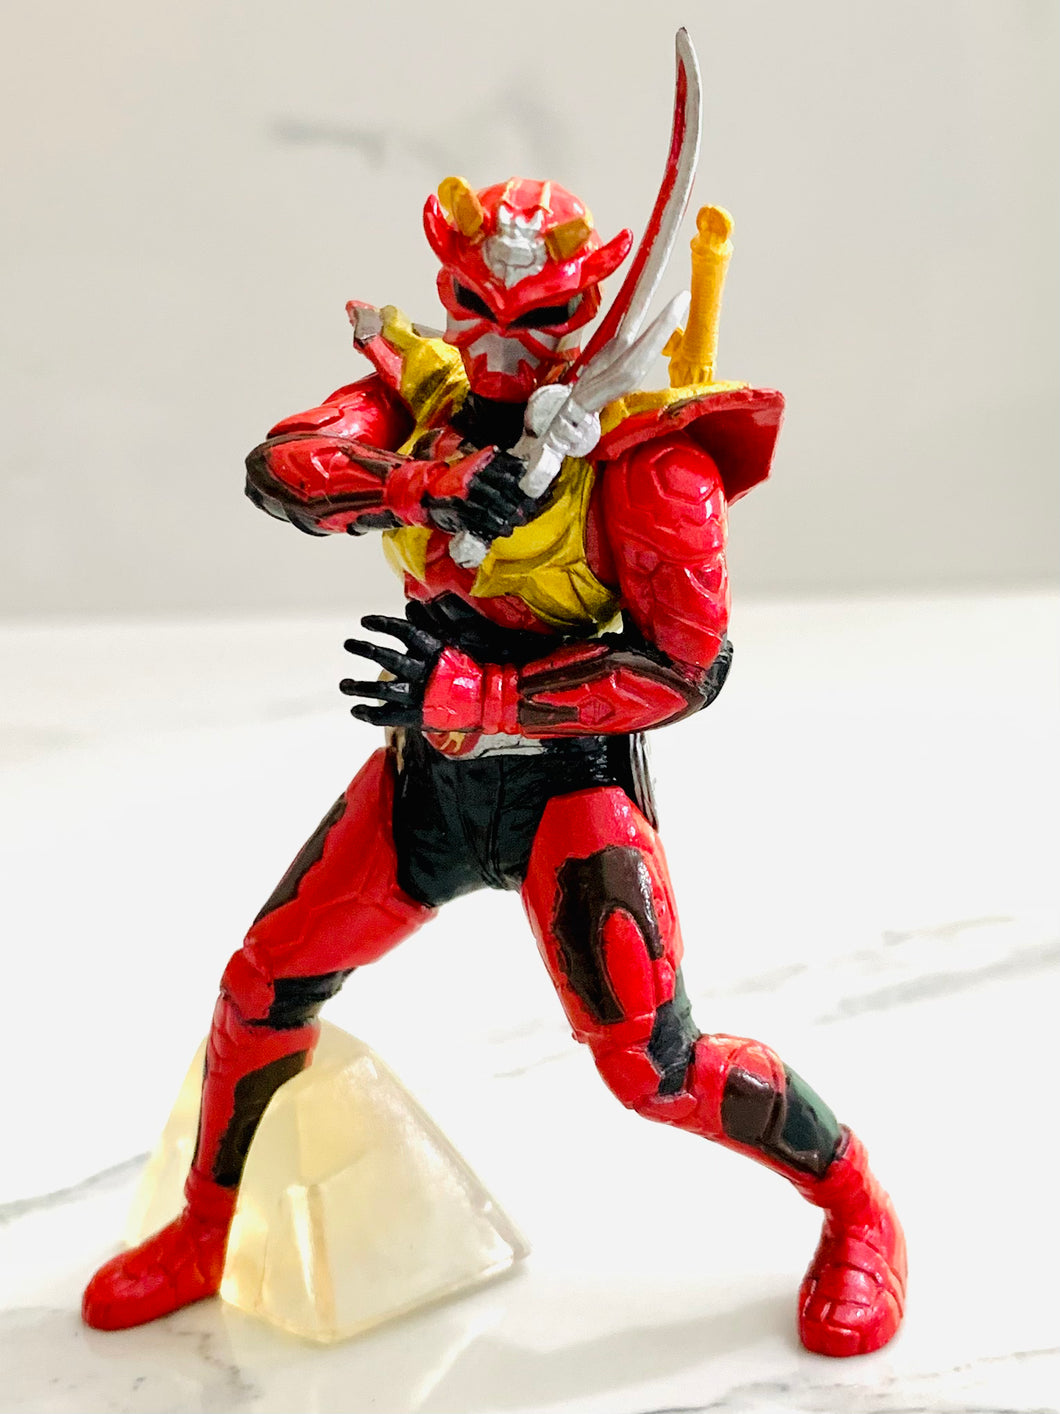 Kamen Rider Hibiki - Kamen Rider Armed Hibiki - HG Series KR 33 ~RETURN TO THE FIRST Hen~ - Trading Figure